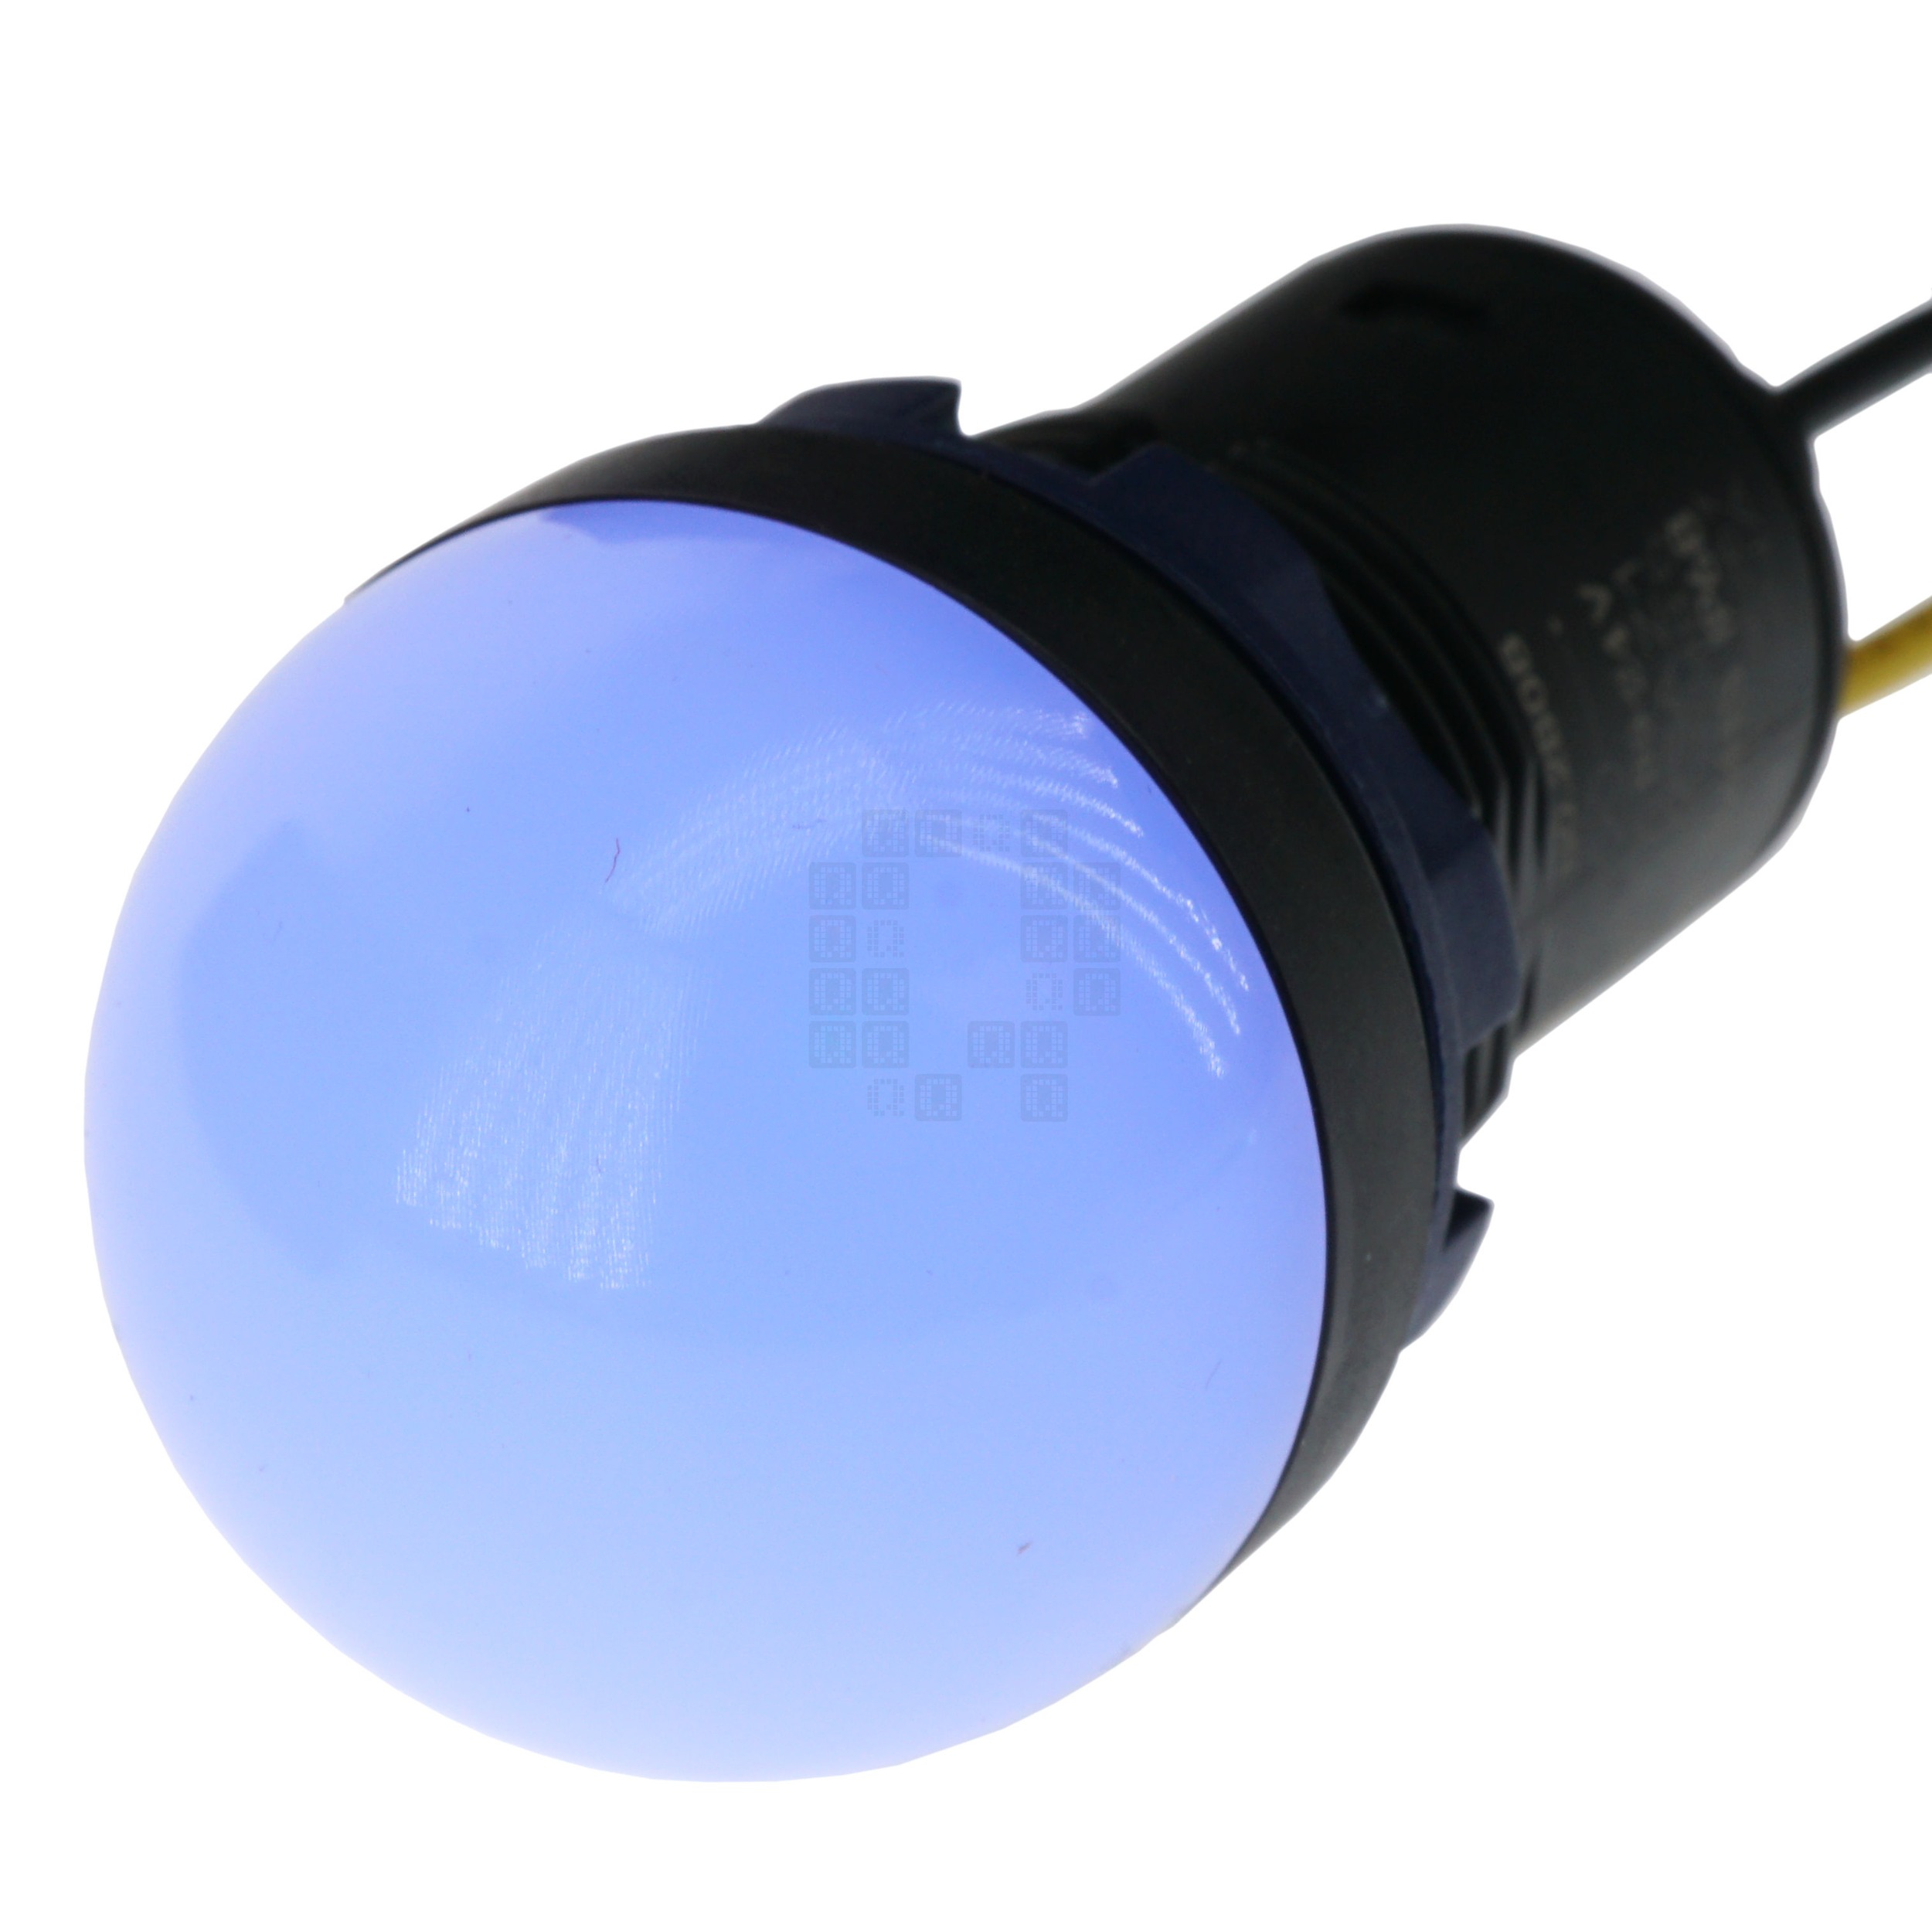 Lanboo 22mm Diffused Dome Panel Mount Blue LED Indicator Light, 9-24VAC/DC, IP68